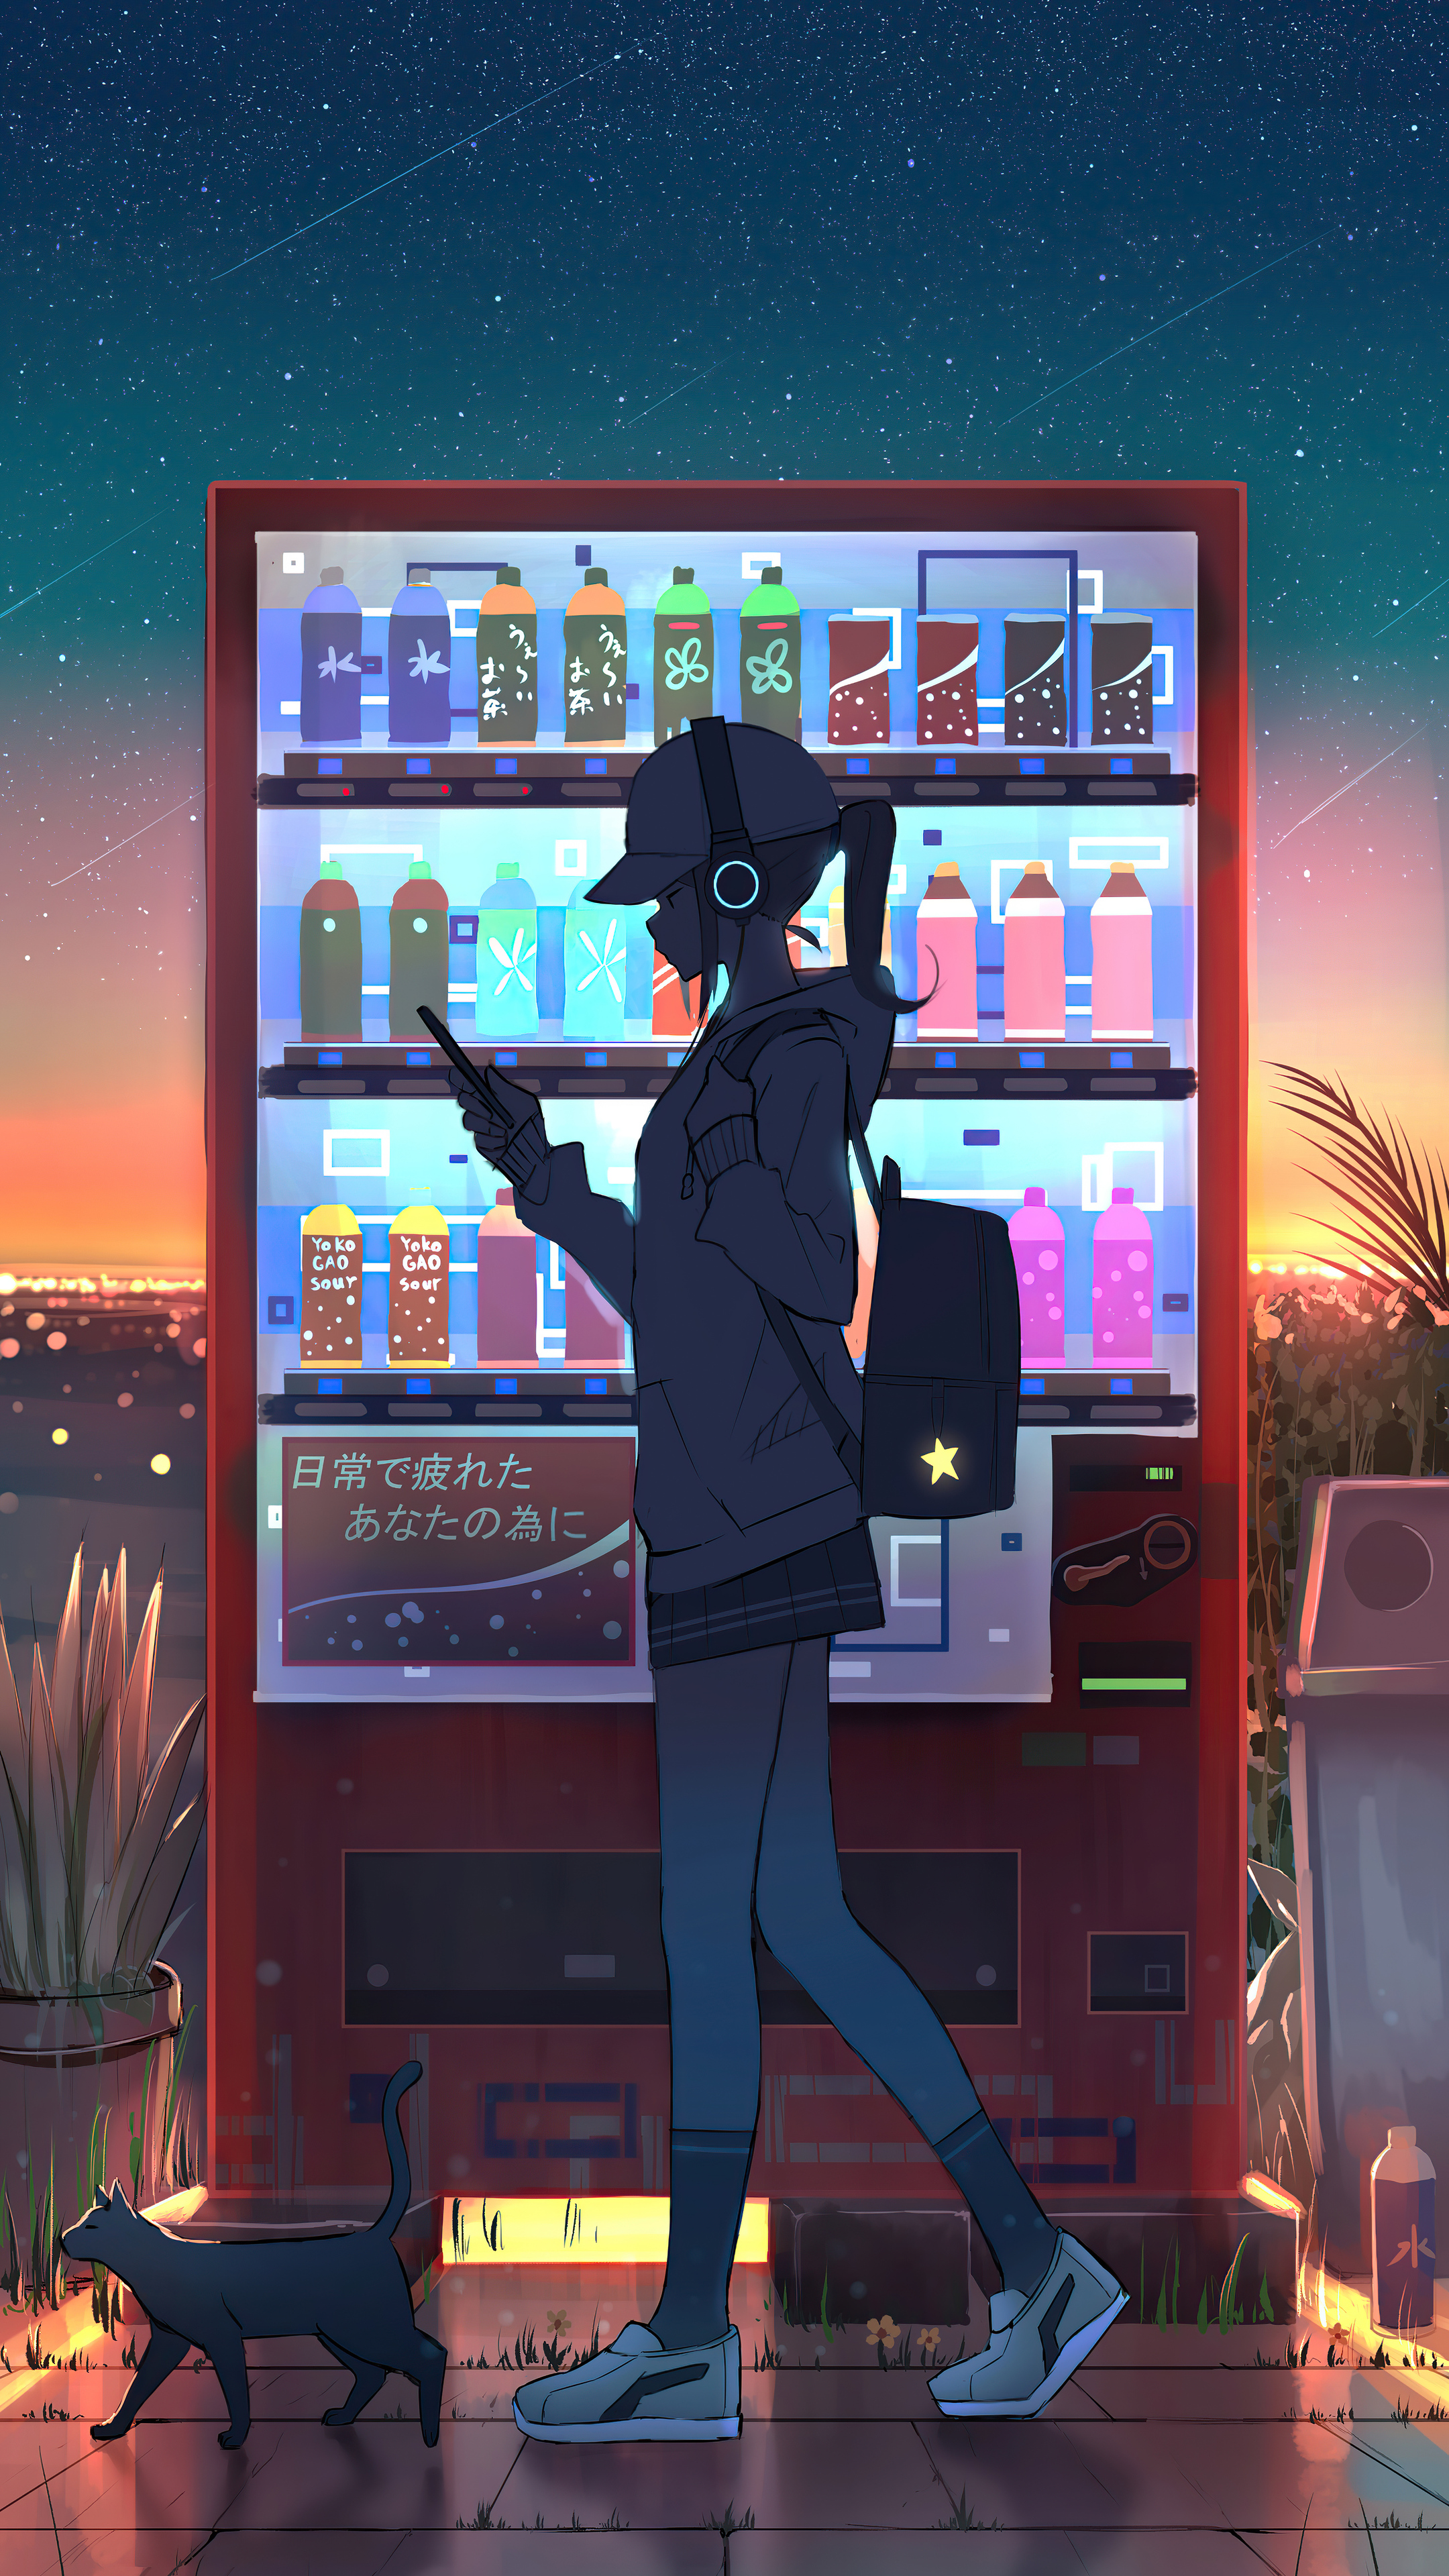 Anime Girl Vending Machine 5k Sony Xperia X, XZ, Z5 Premium HD 4k Wallpaper, Image, Background, Photo and Picture